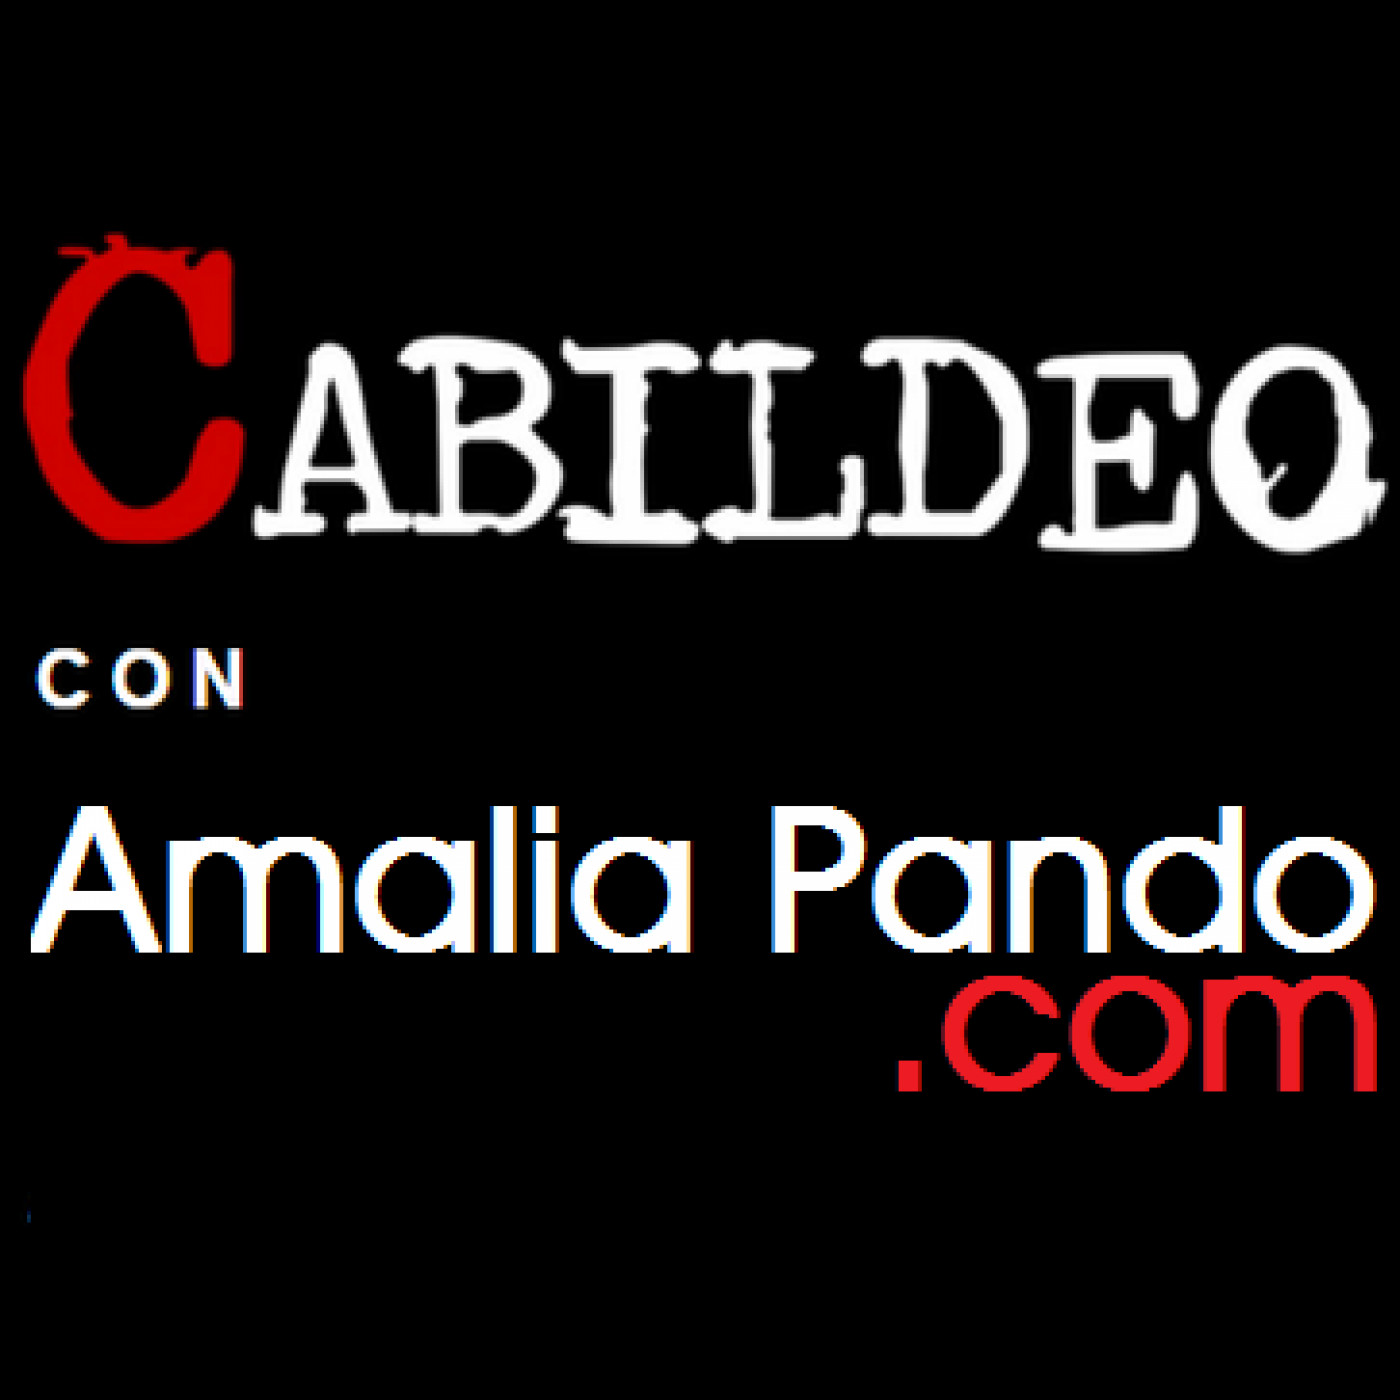  AmaliaPando Cabildeo 2